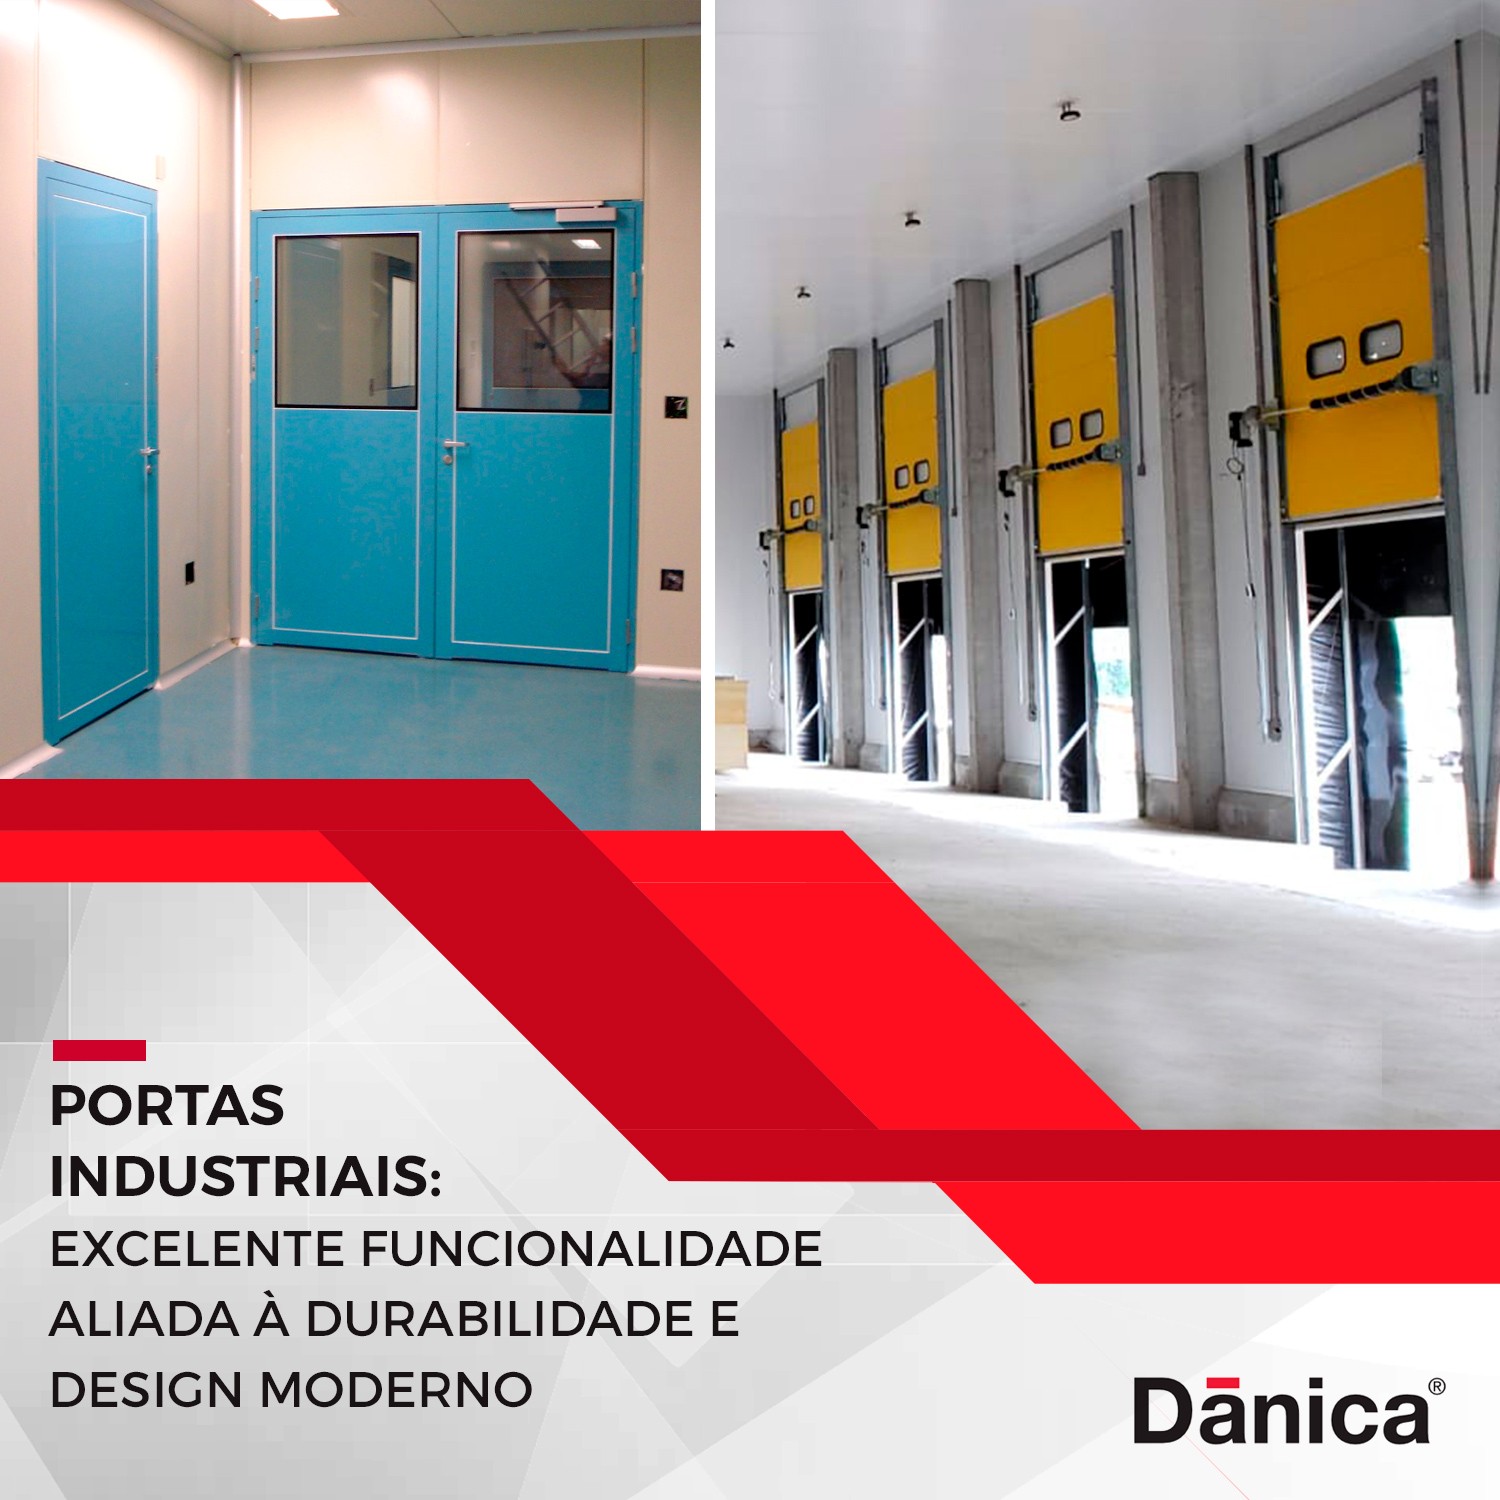 Portas Industriais: Excelente funcionalidade aliada à durabilidade e design moderno